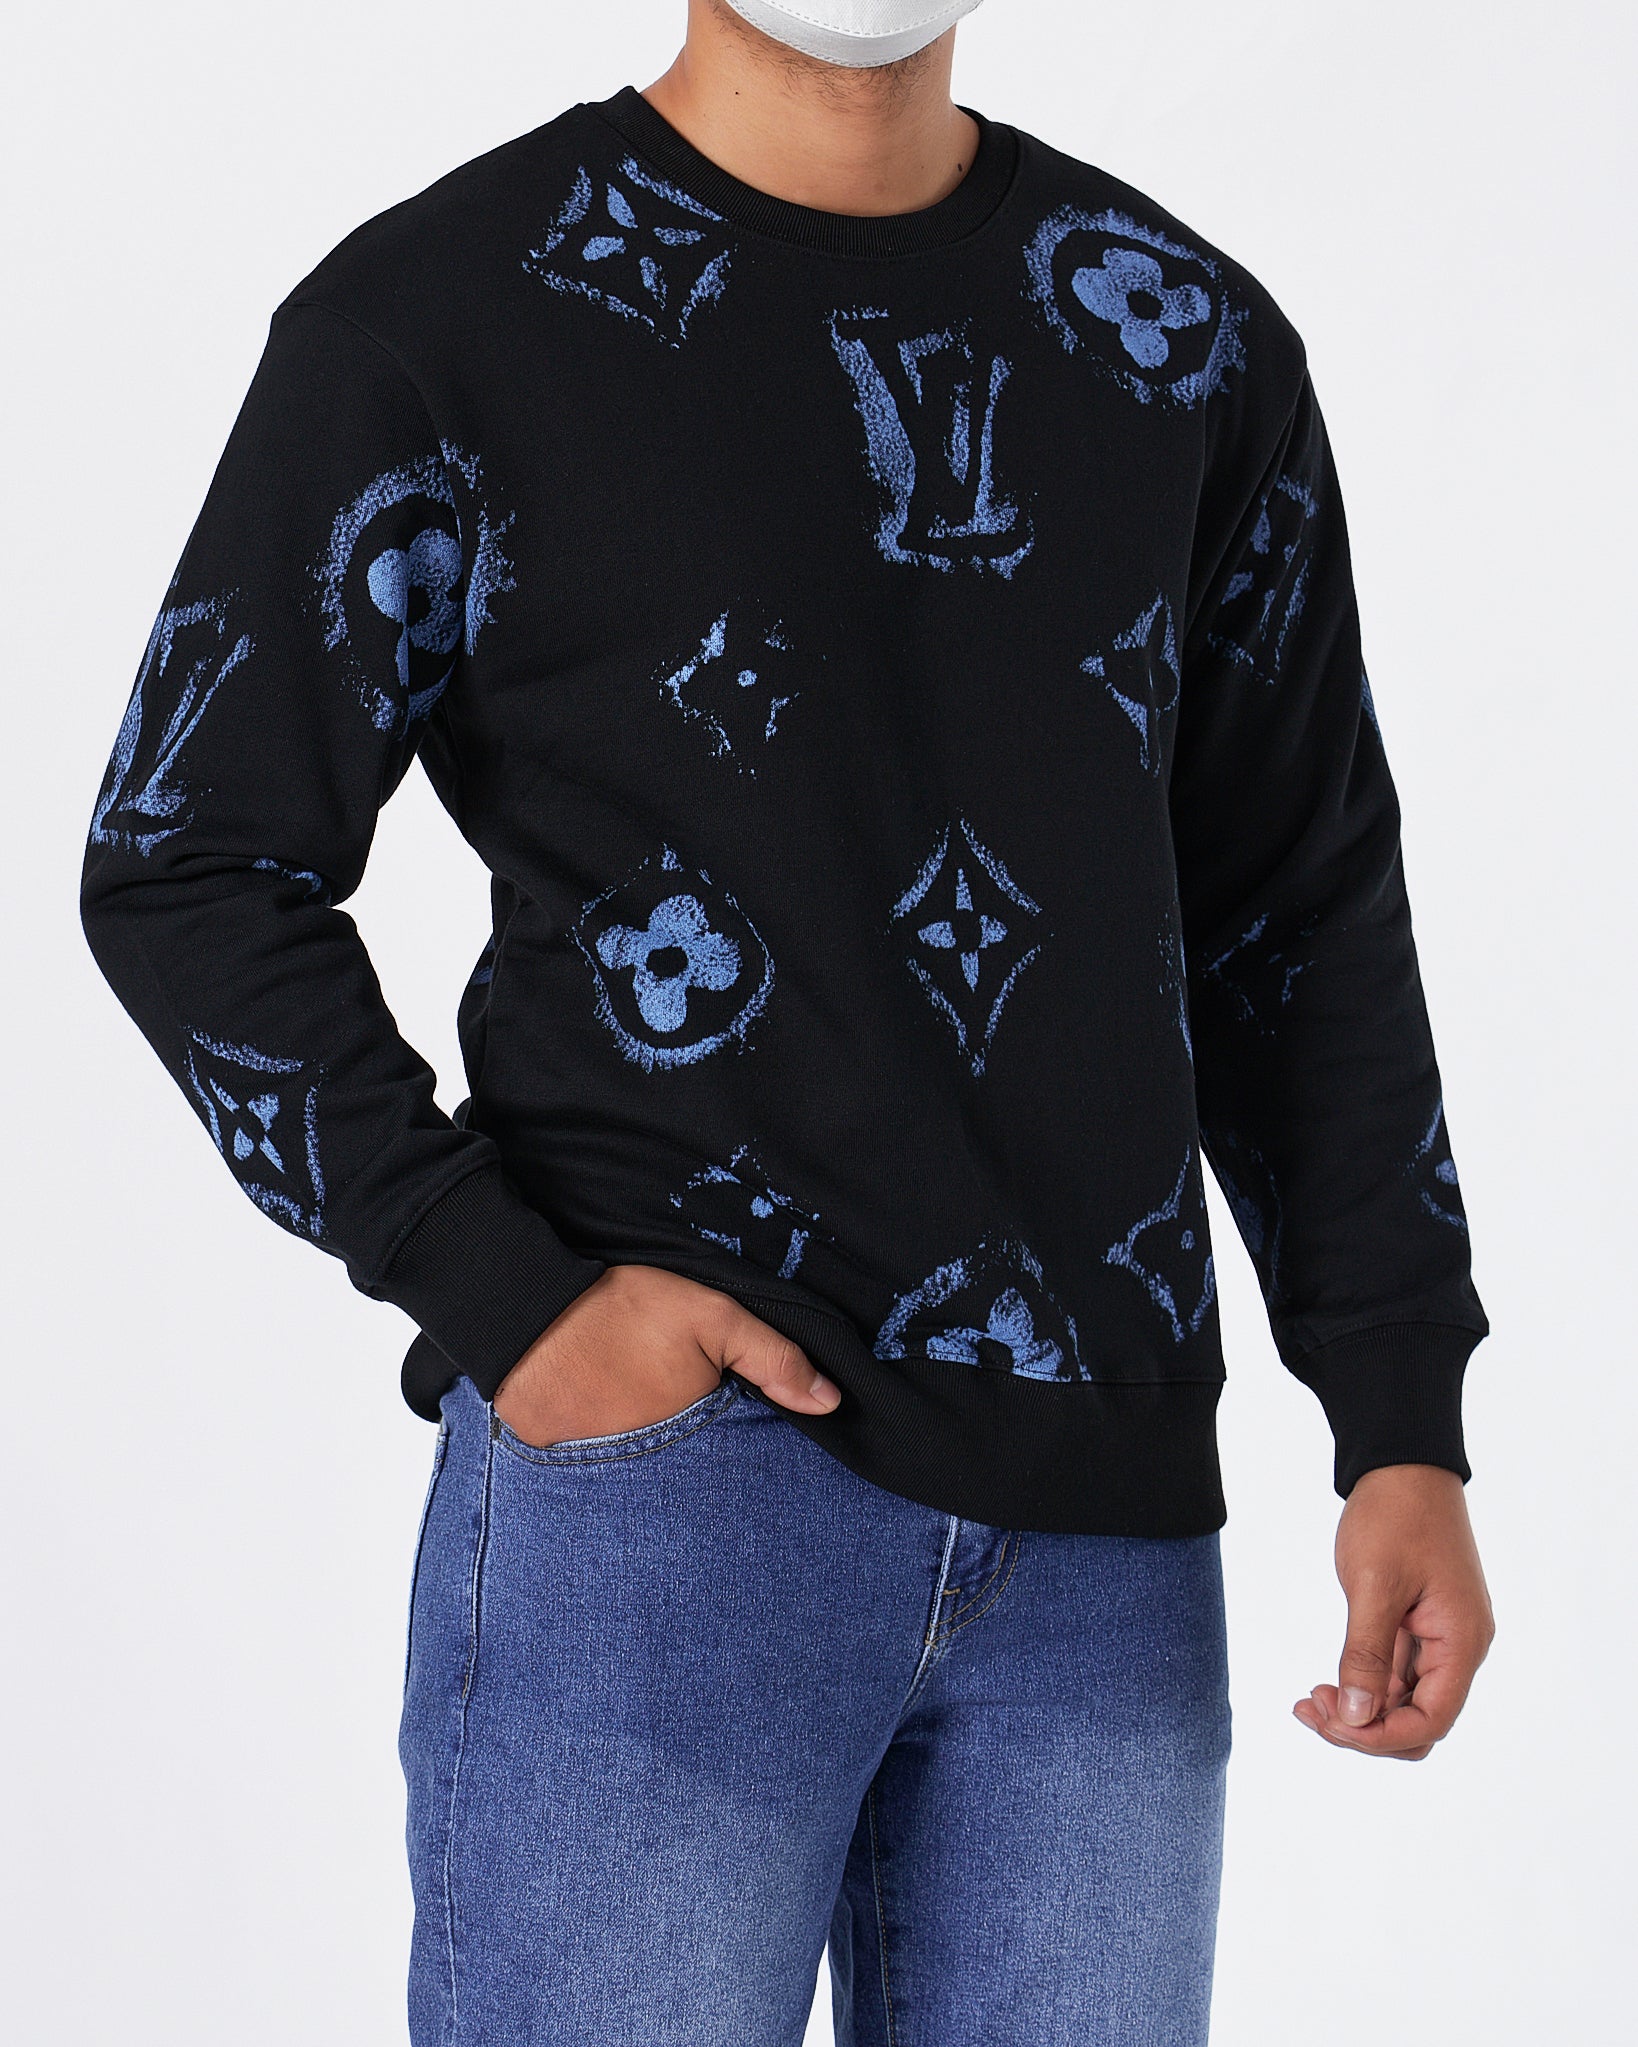 monogram louis vuitton sweater